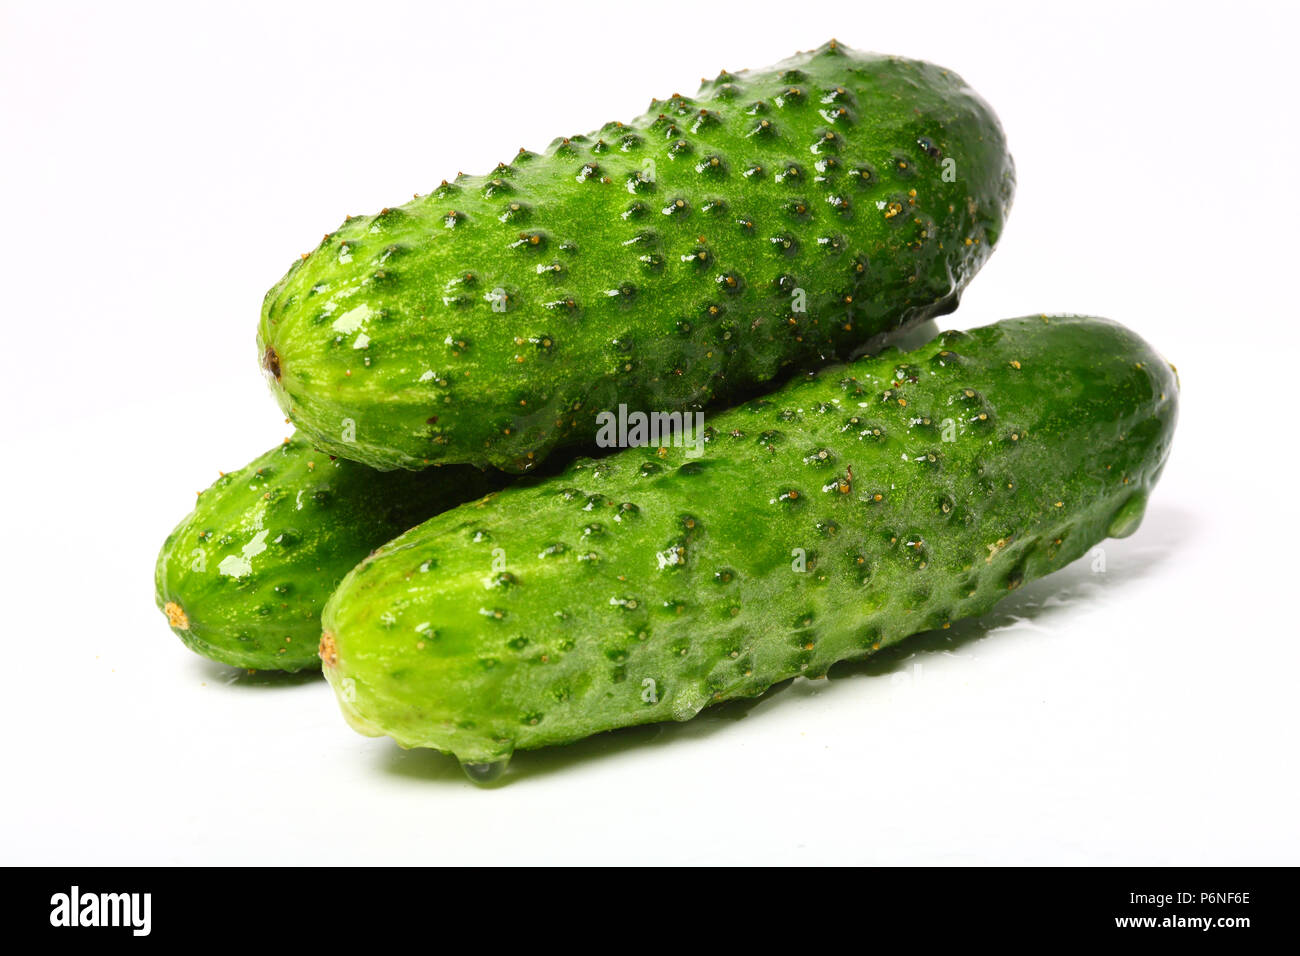 https://c8.alamy.com/comp/P6NF6E/three-fresh-organic-cucumbers-on-white-background-P6NF6E.jpg